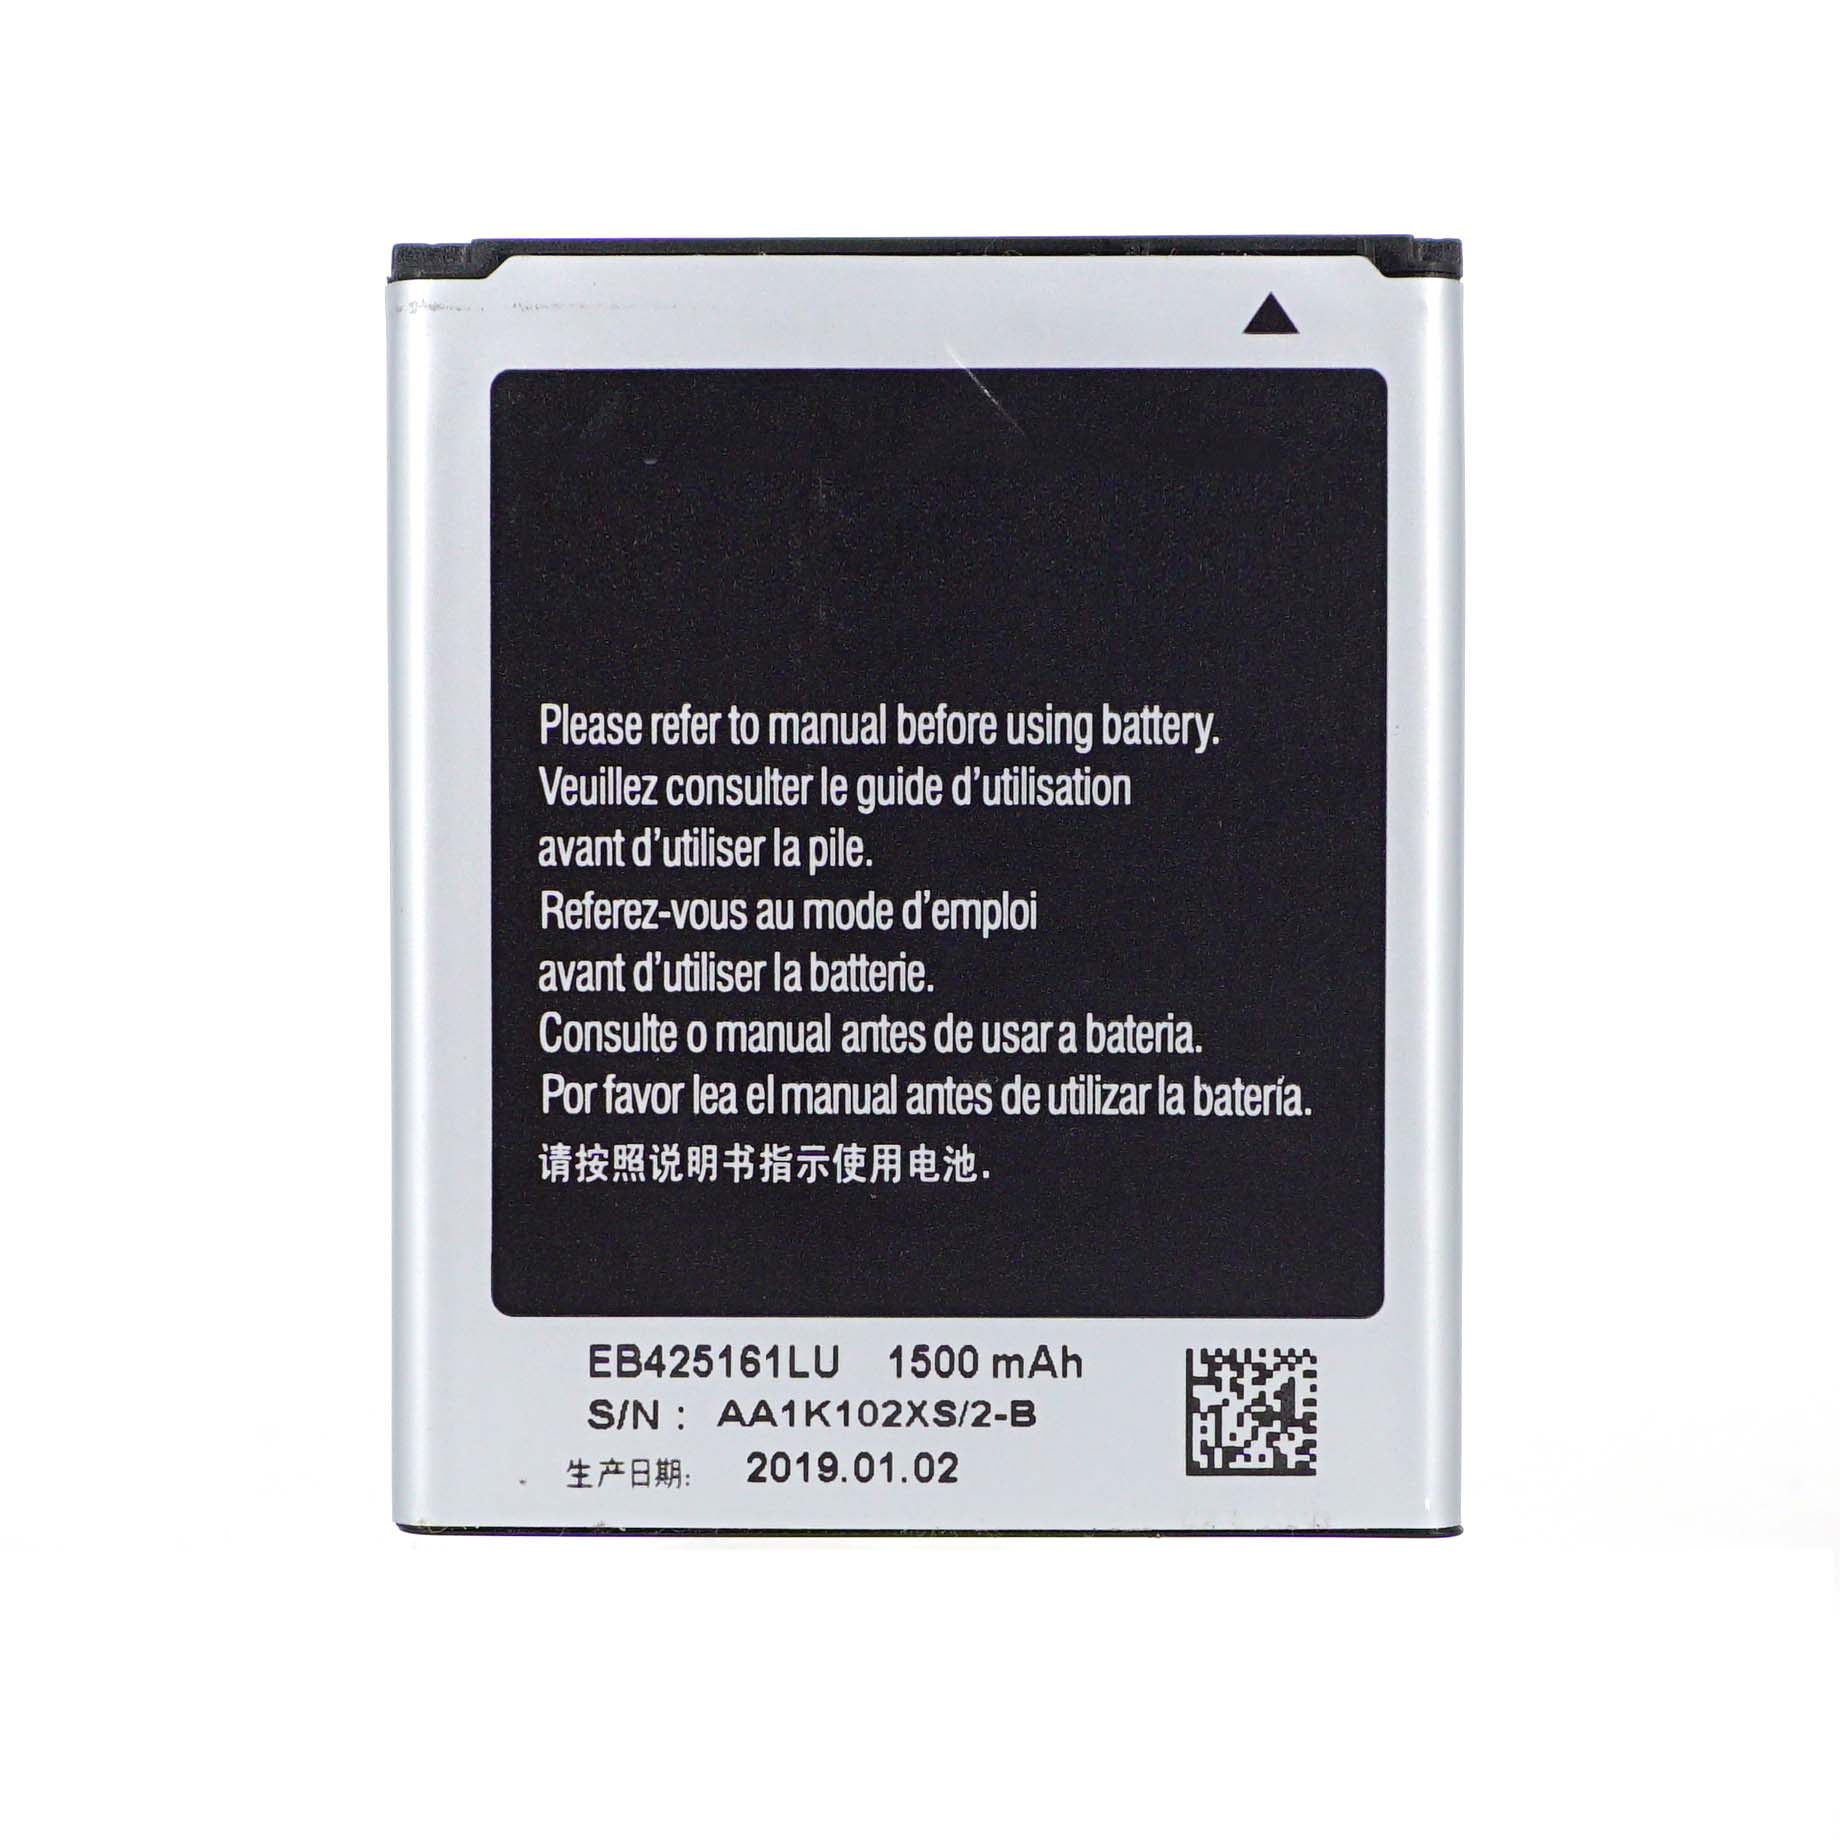 Ohd Originele Hoge Capaciteit Batterij EB425161LU Voor Samsung Galaxy S3 Mini S3Mini I8190 I8160 S7580 Ace 2 Trend S Duos 1500Mah